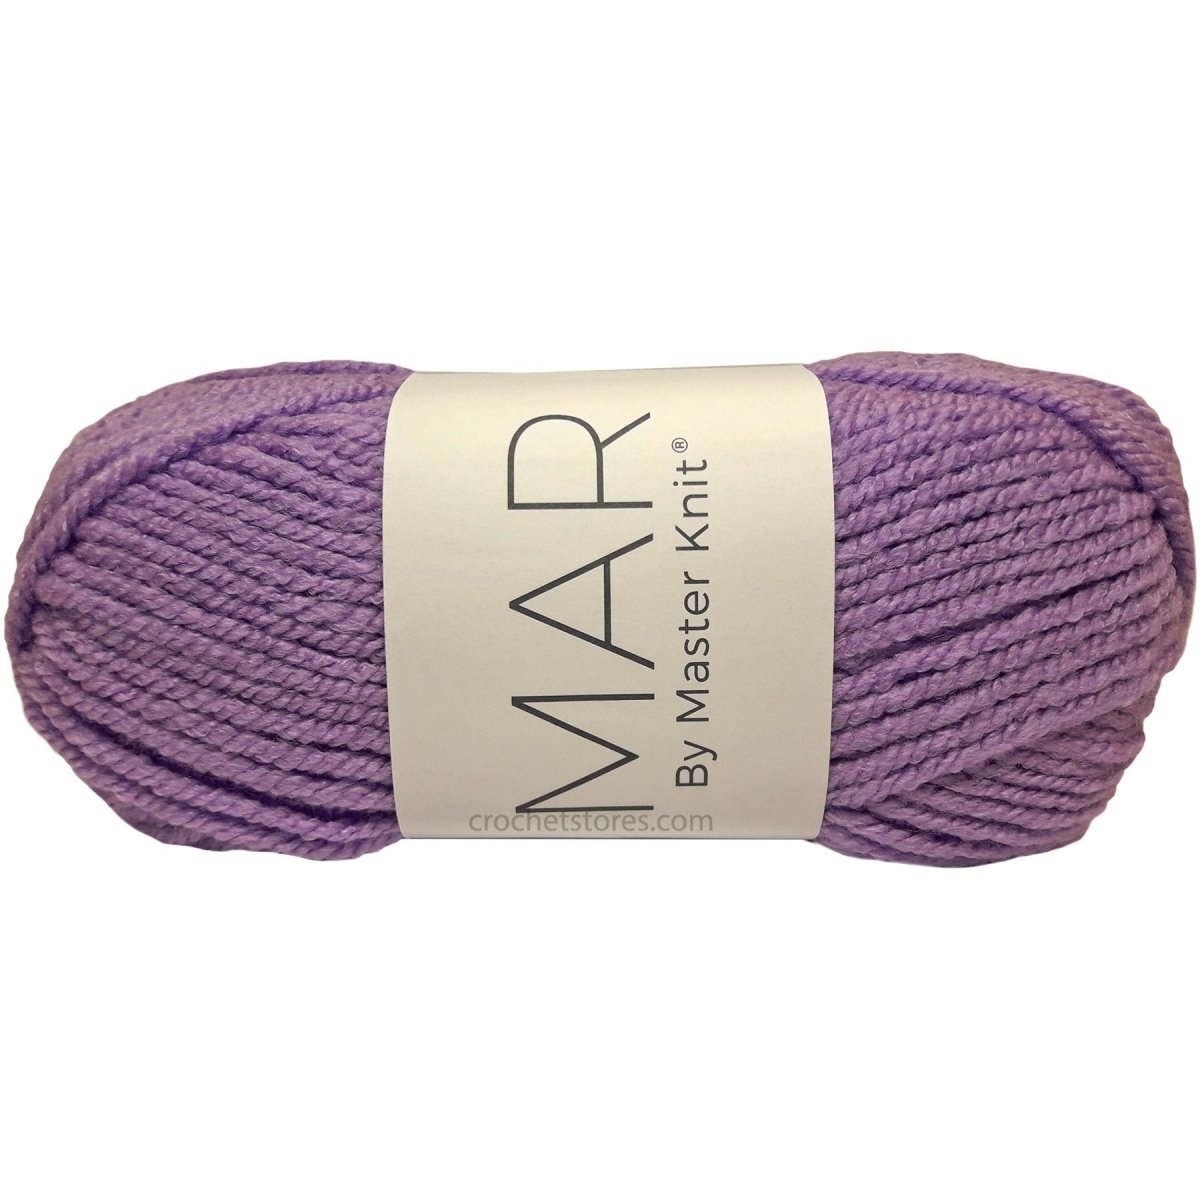 MAR - Chunky - Crochetstores9135-708745051438289